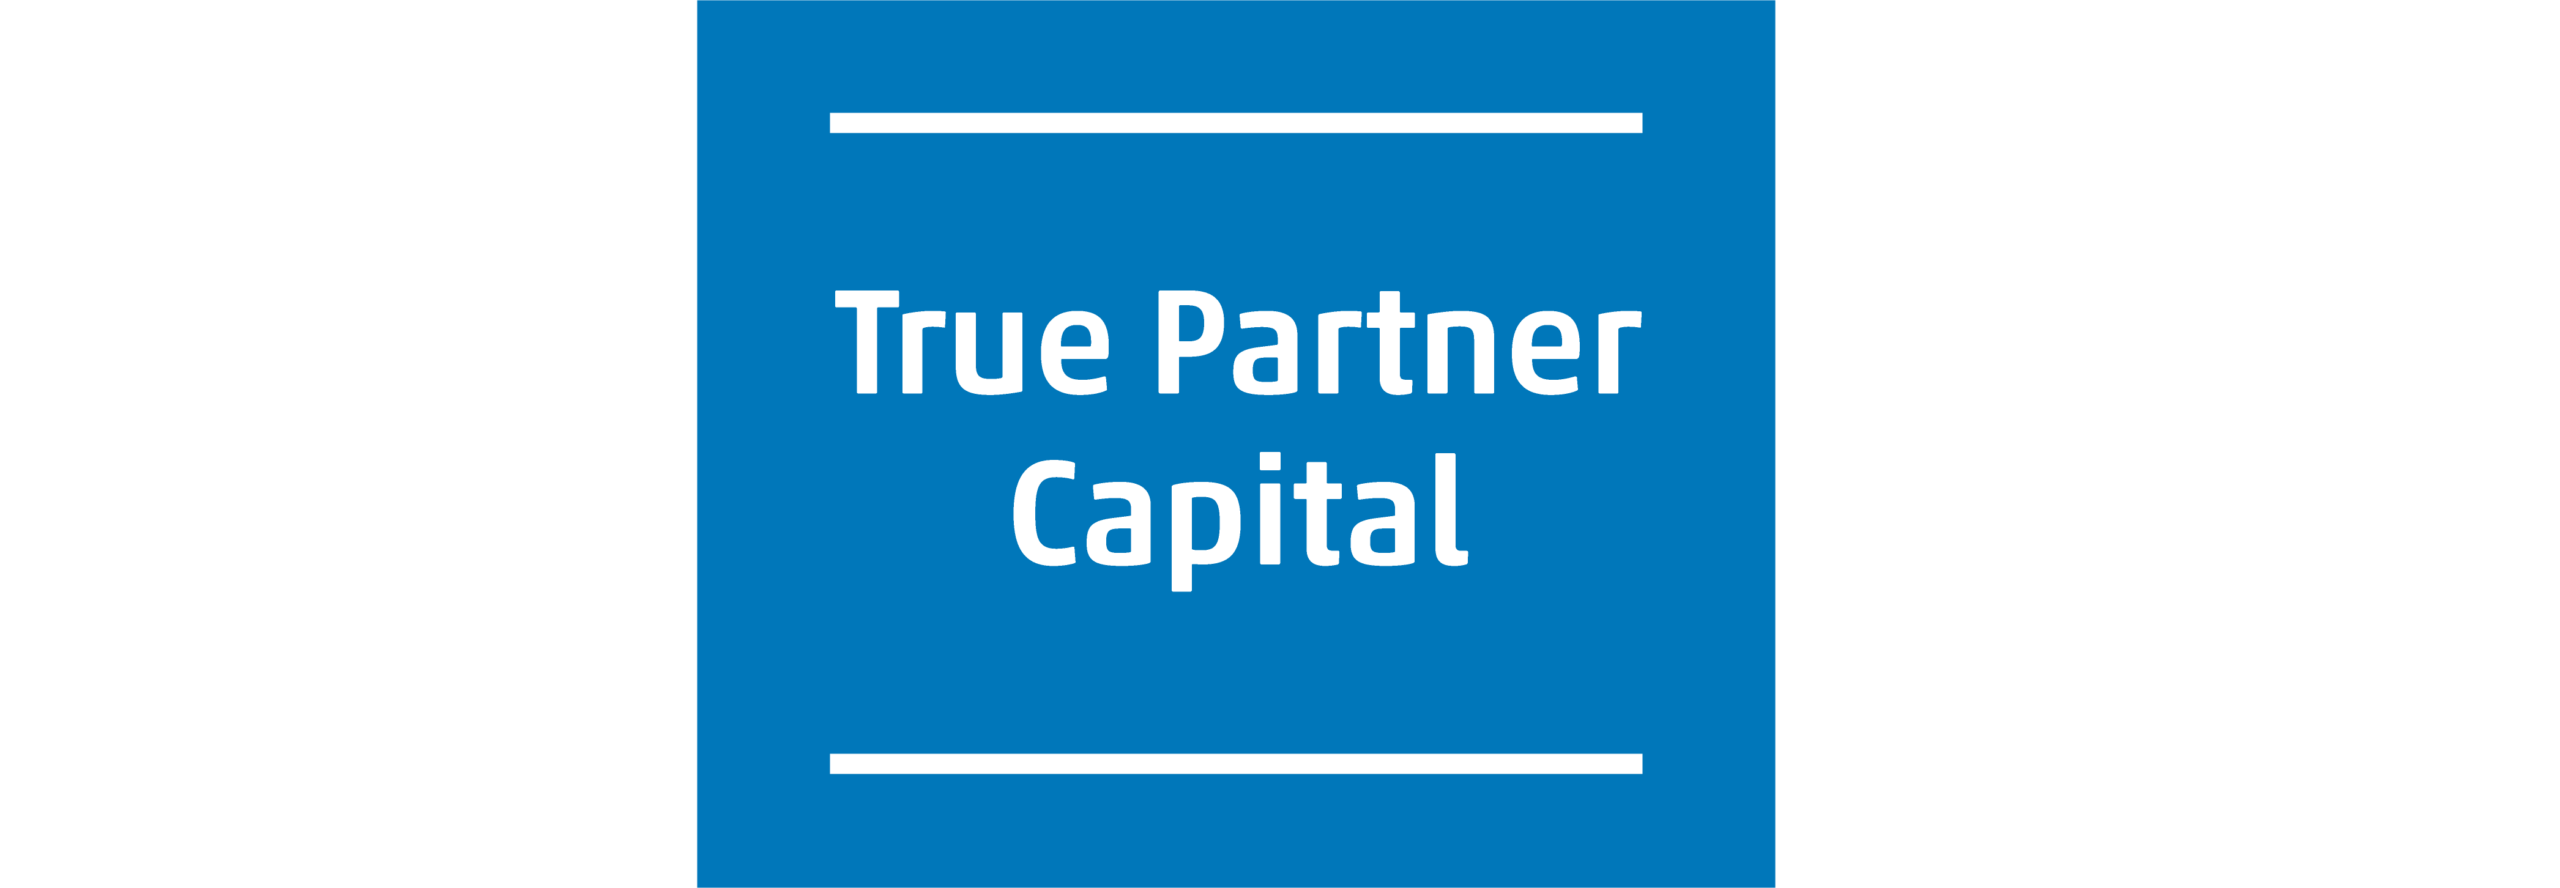 True Partner Capital